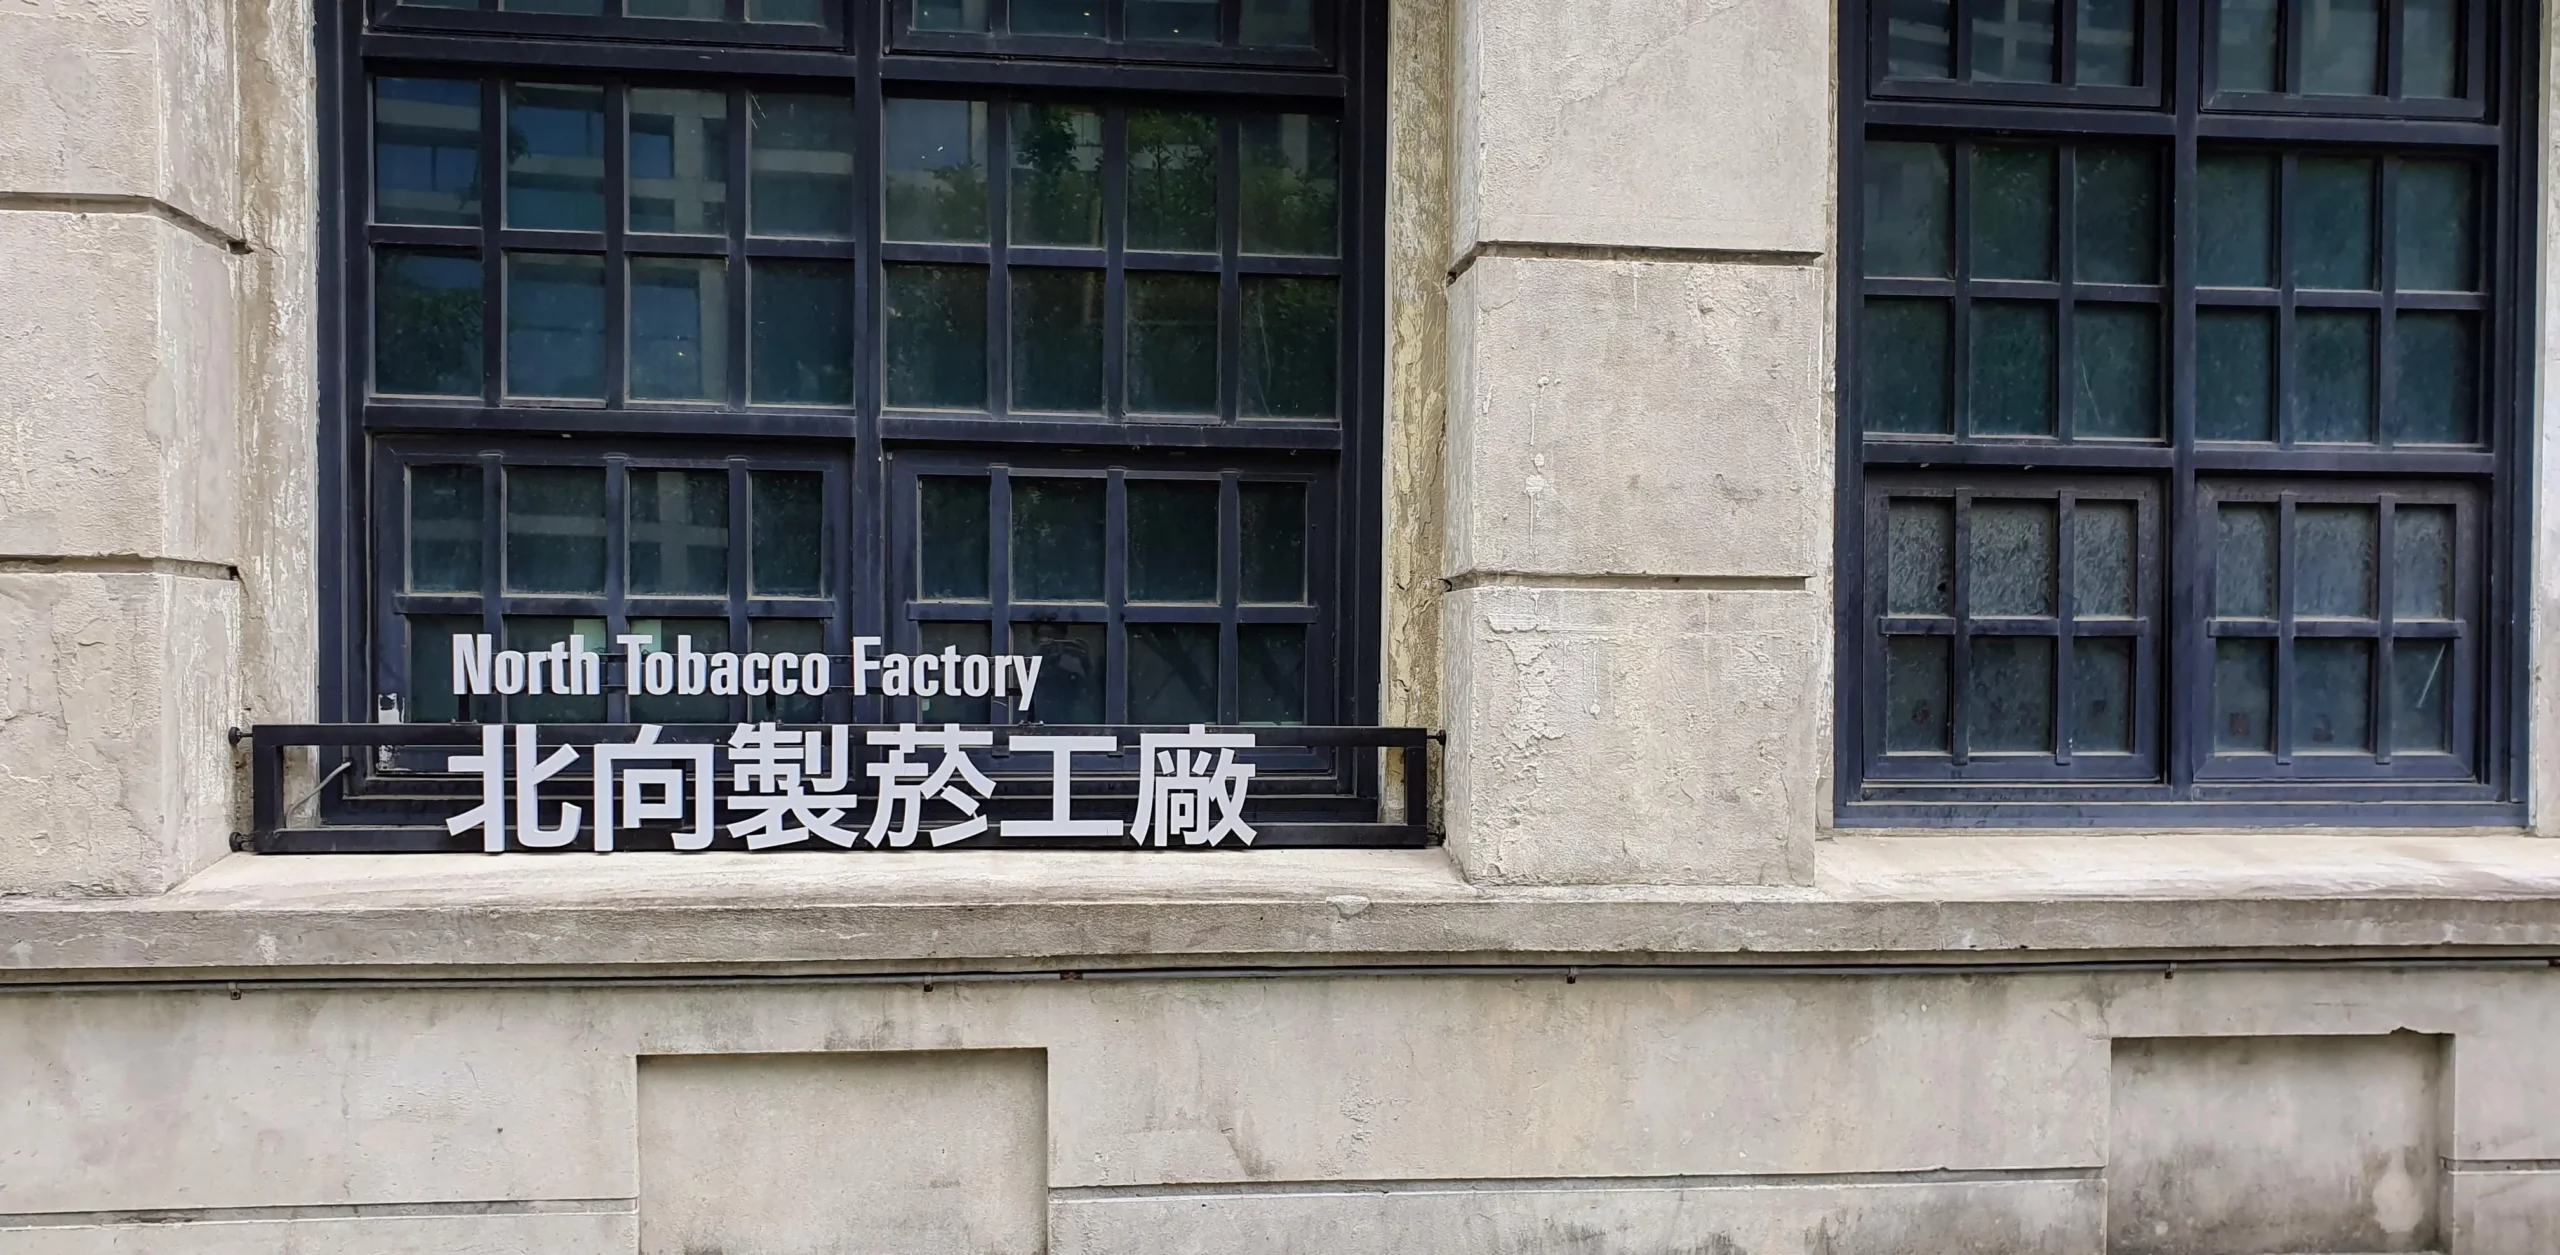 North Tobacco factory in Taipei's creative park